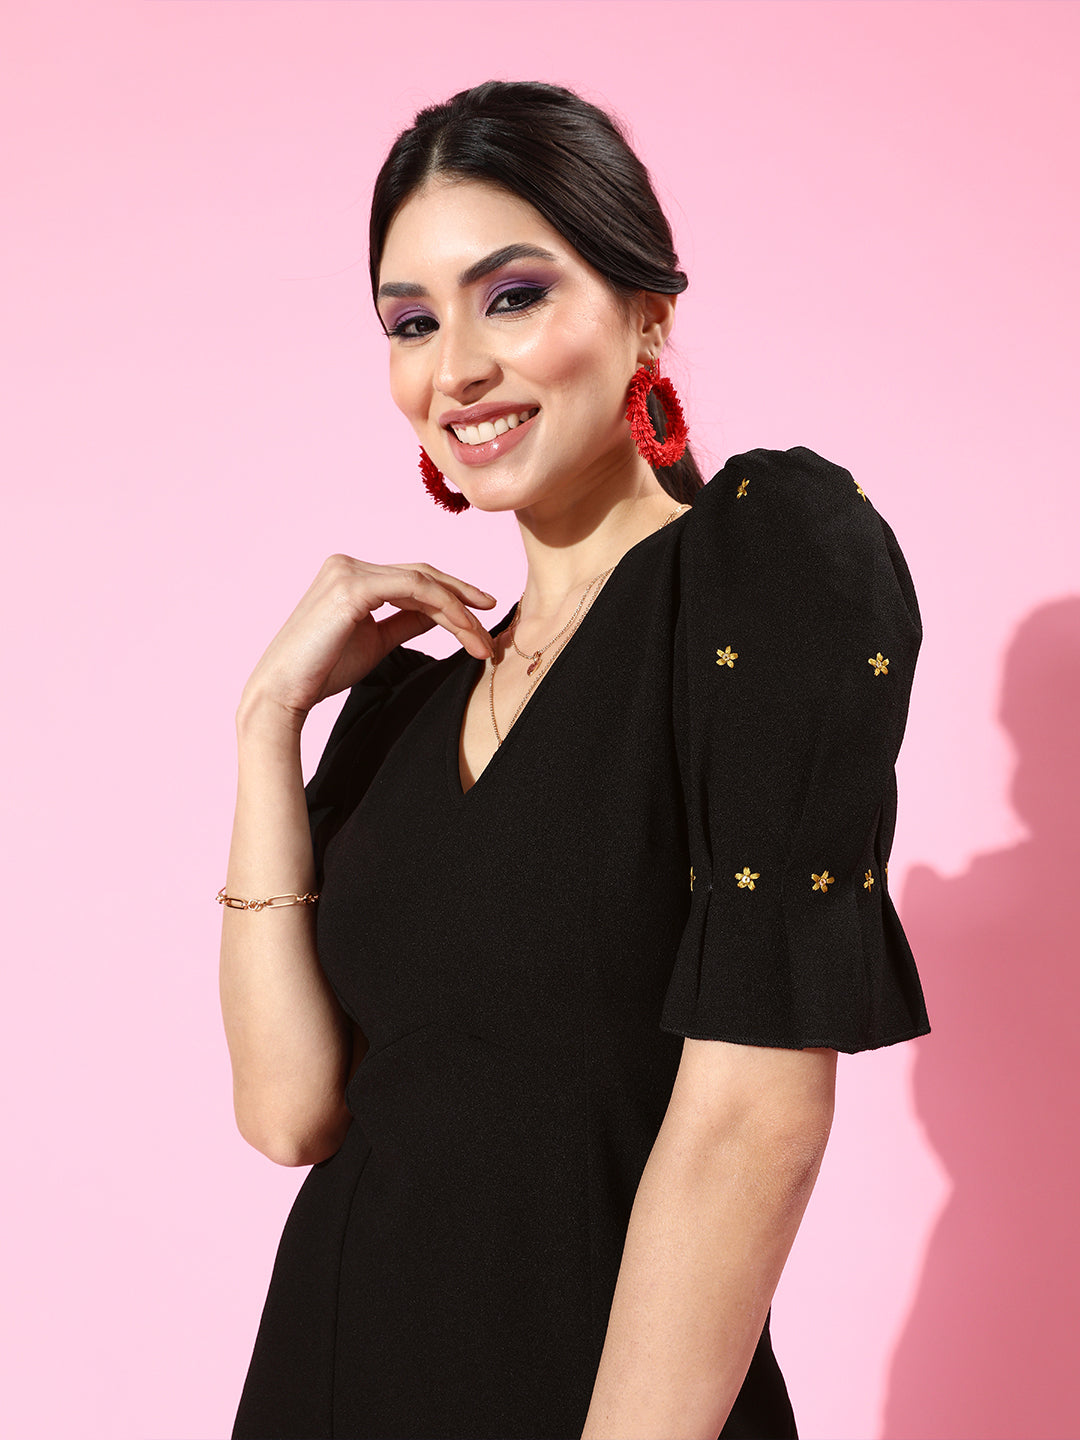 Athena Black Waisted Dress with Embroidery Details - Athena Lifestyle